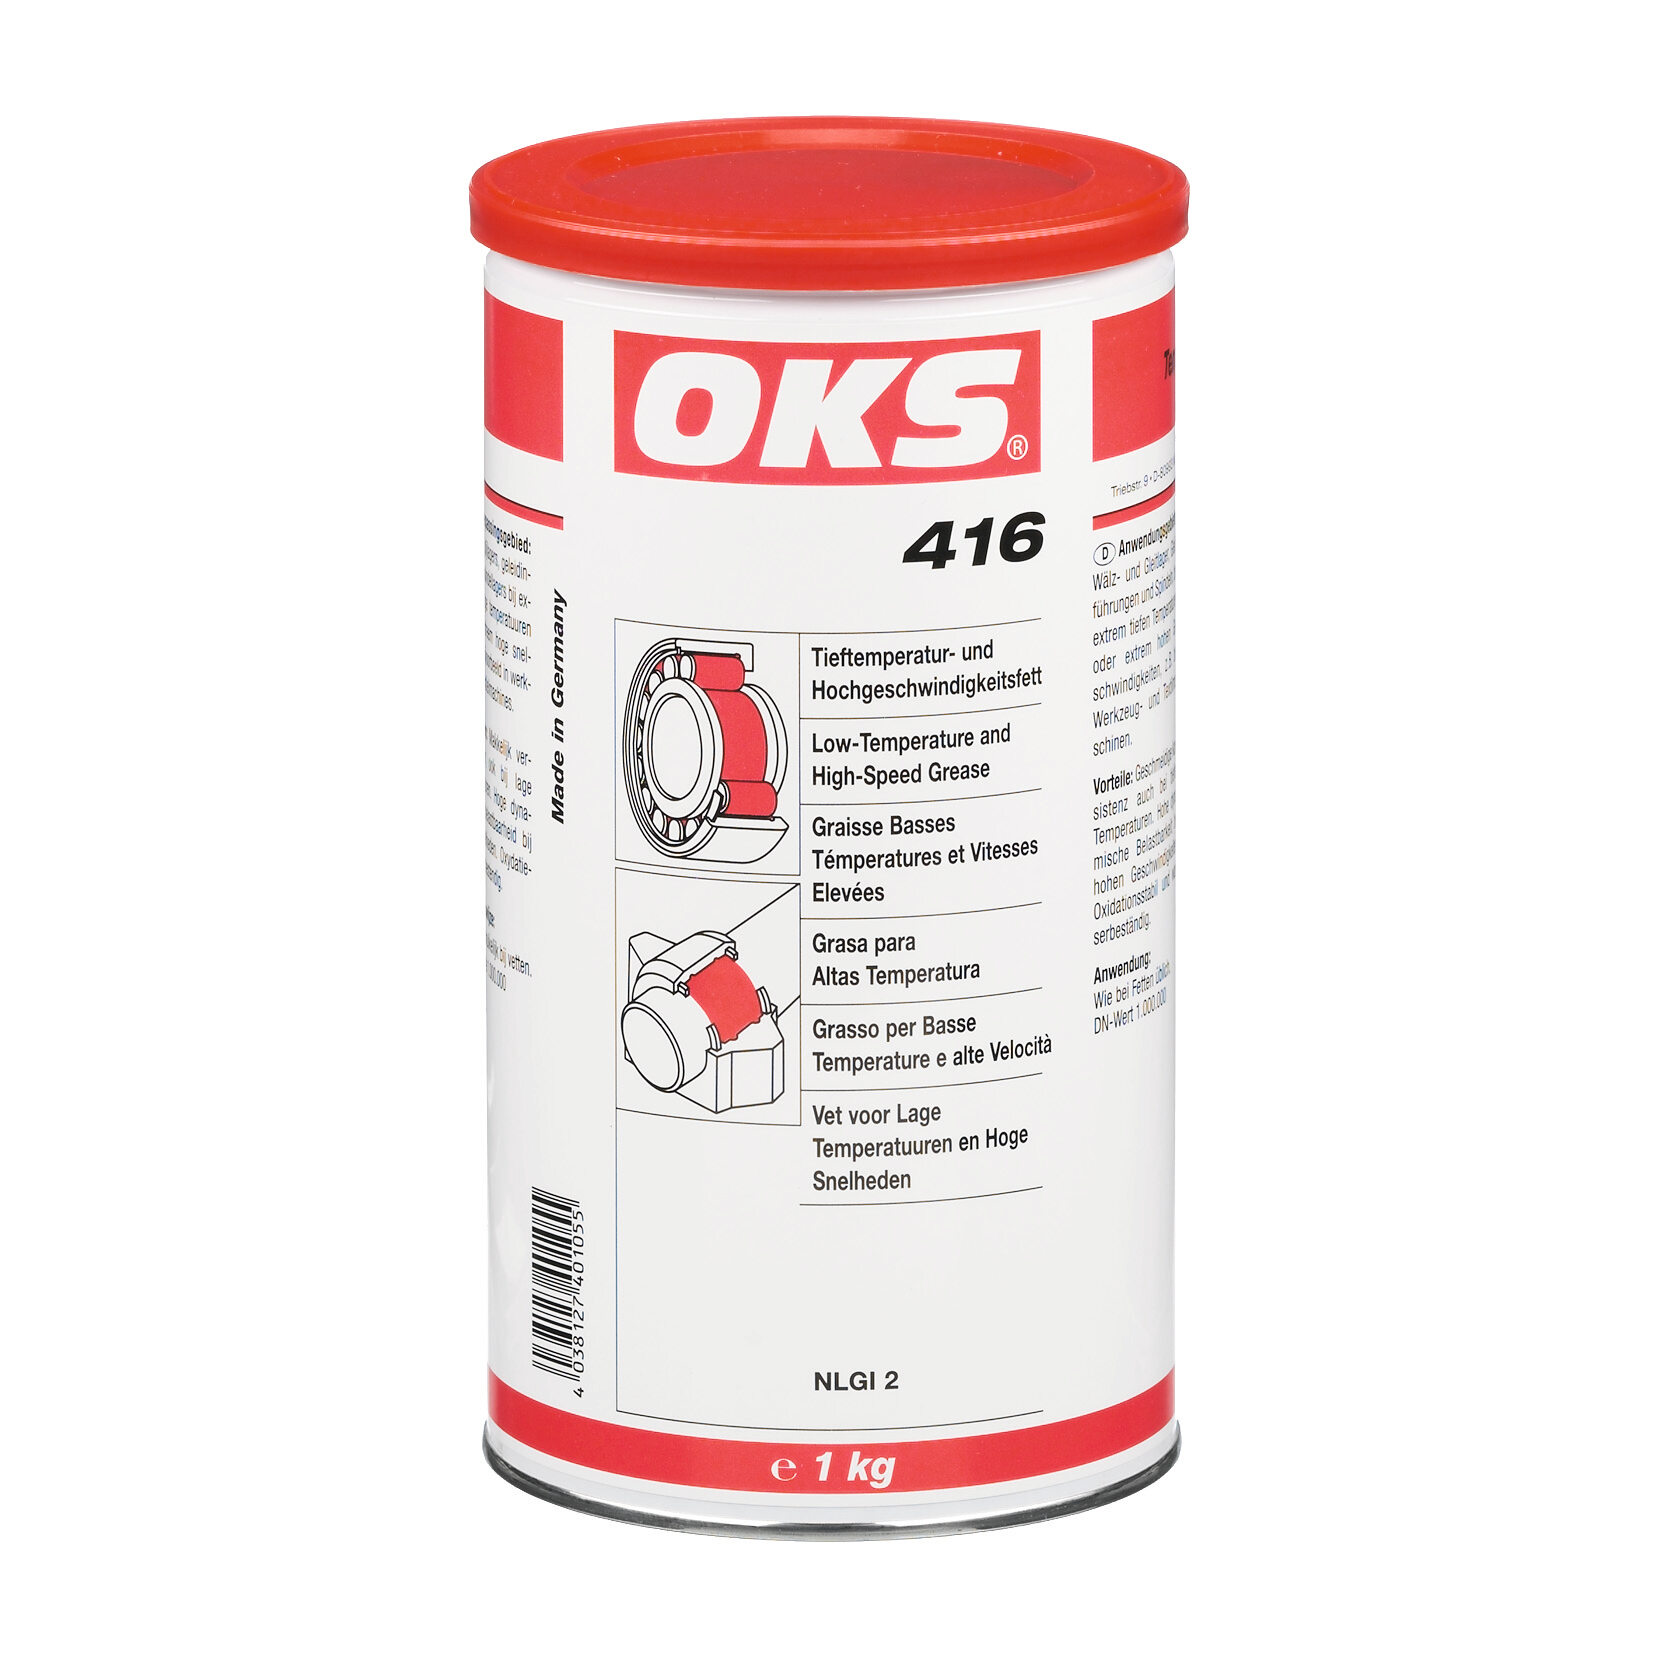 OKS0416-1 OKS 416 is een lage-temperatuur- en hoge-snelheidsvet.